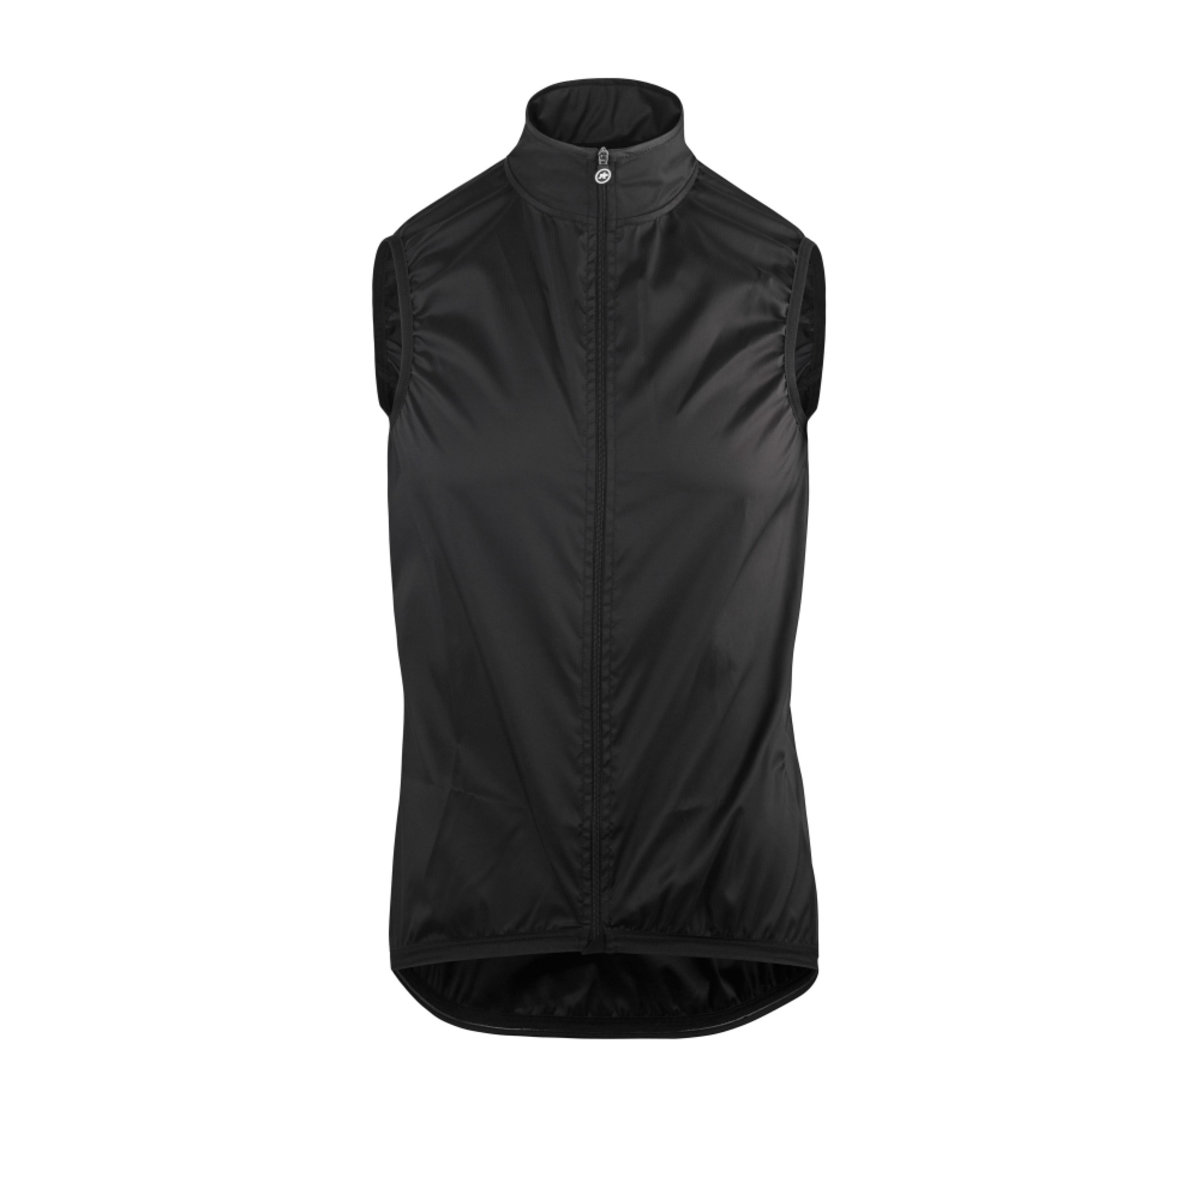 Жилетка ASSOS Mille GT Wind Vest Black Series, мужская, черная, XLG